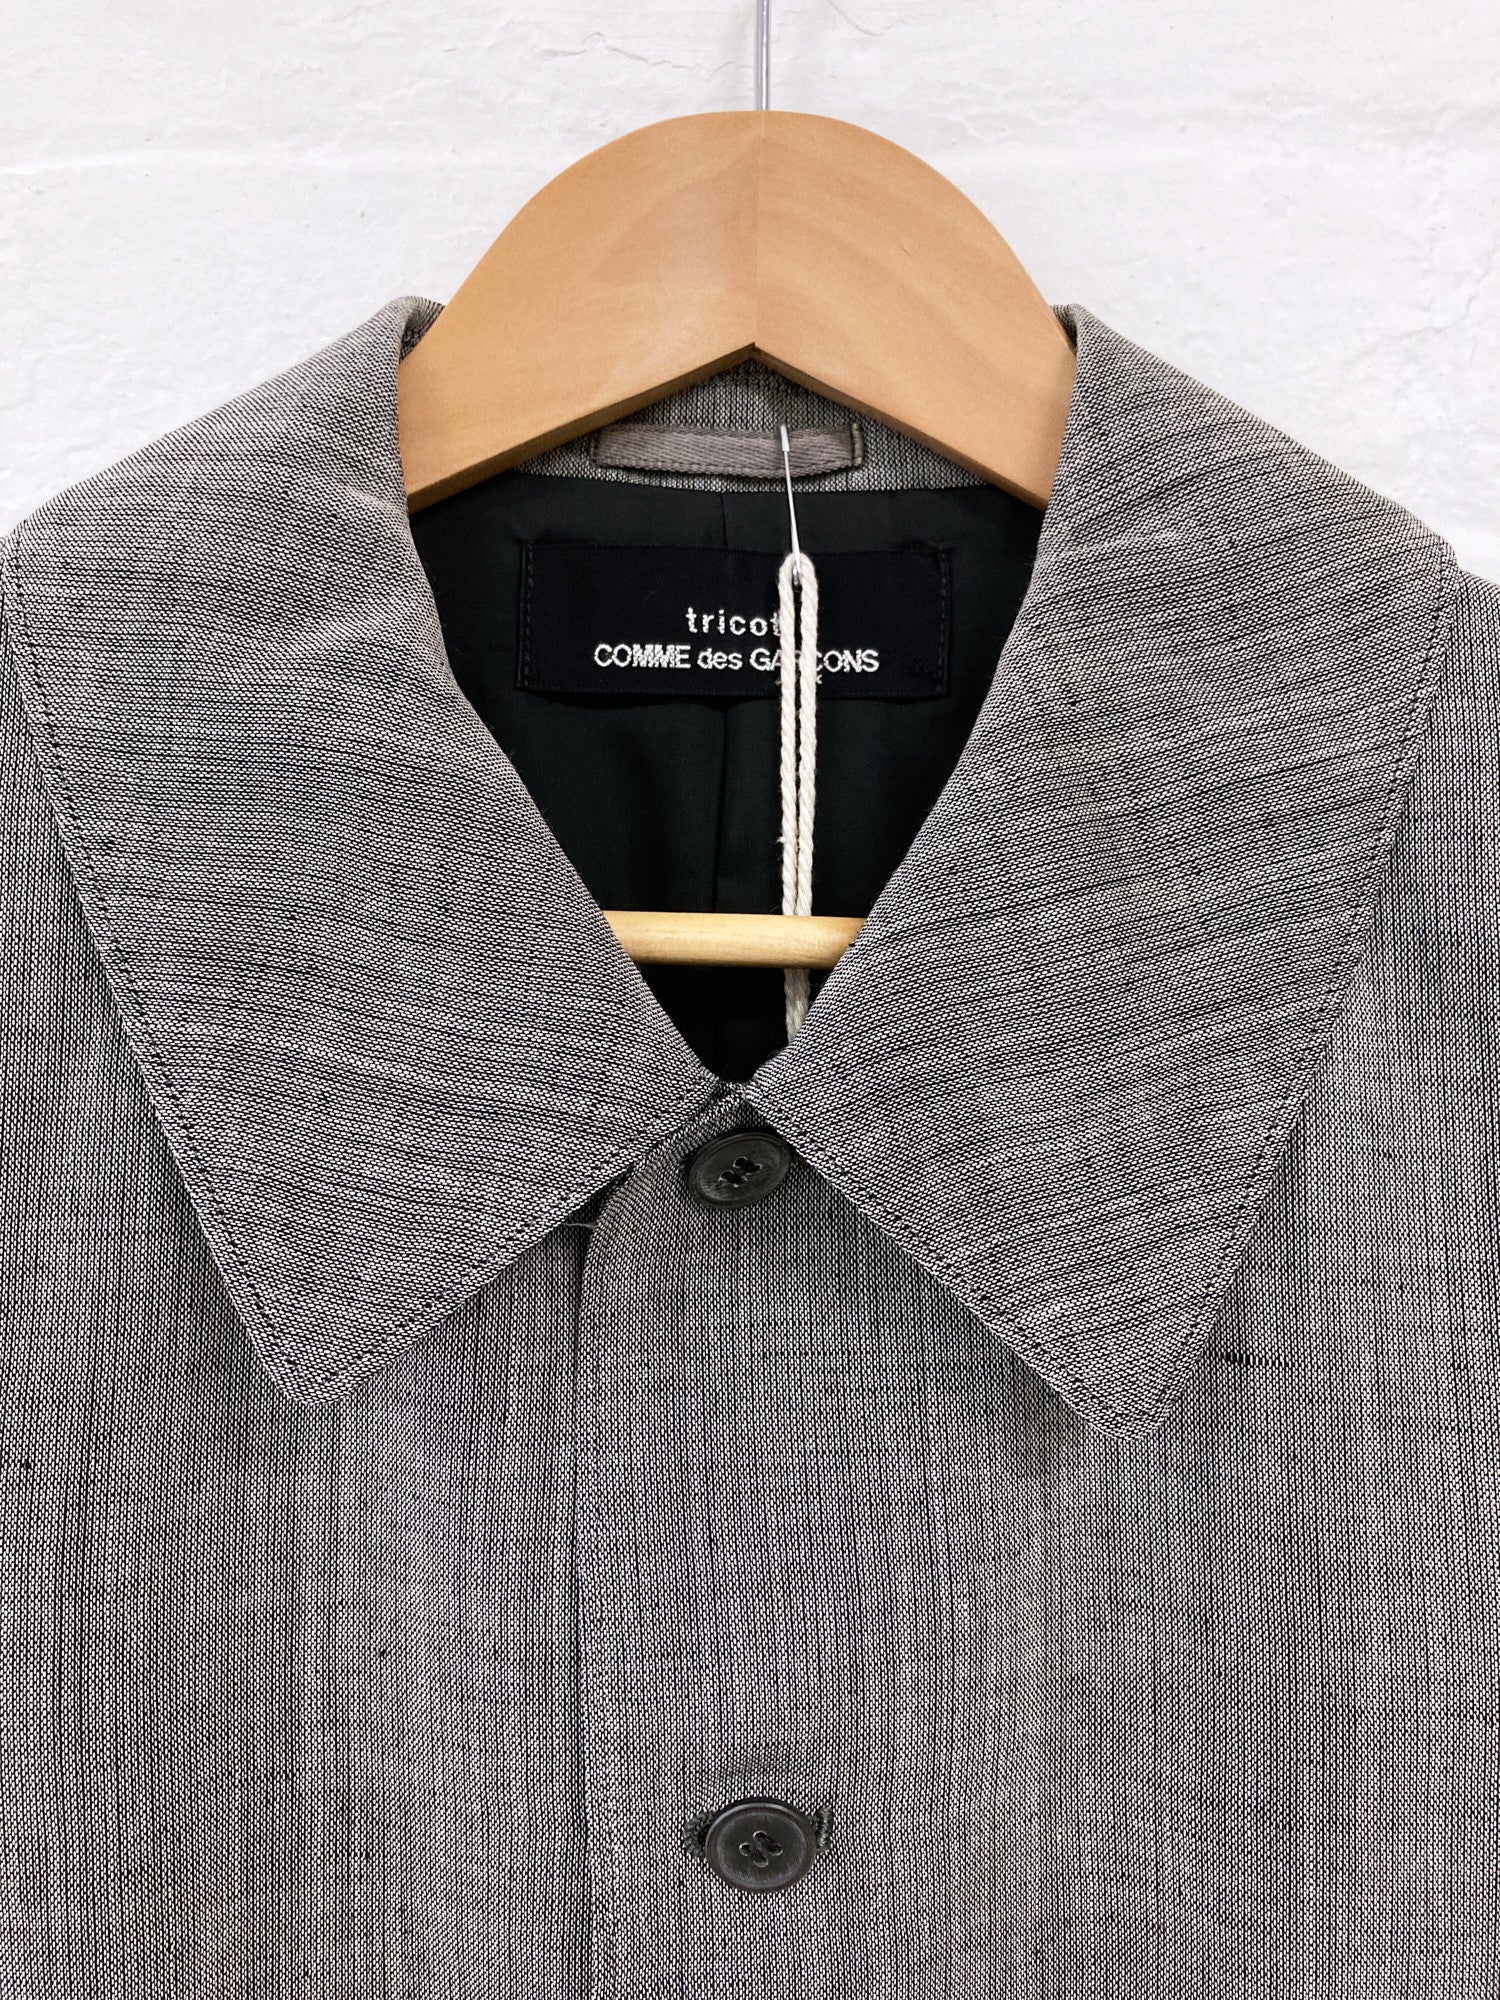 Tricot Comme des Garcons 1995 grey linen-wool dress and jacket suit